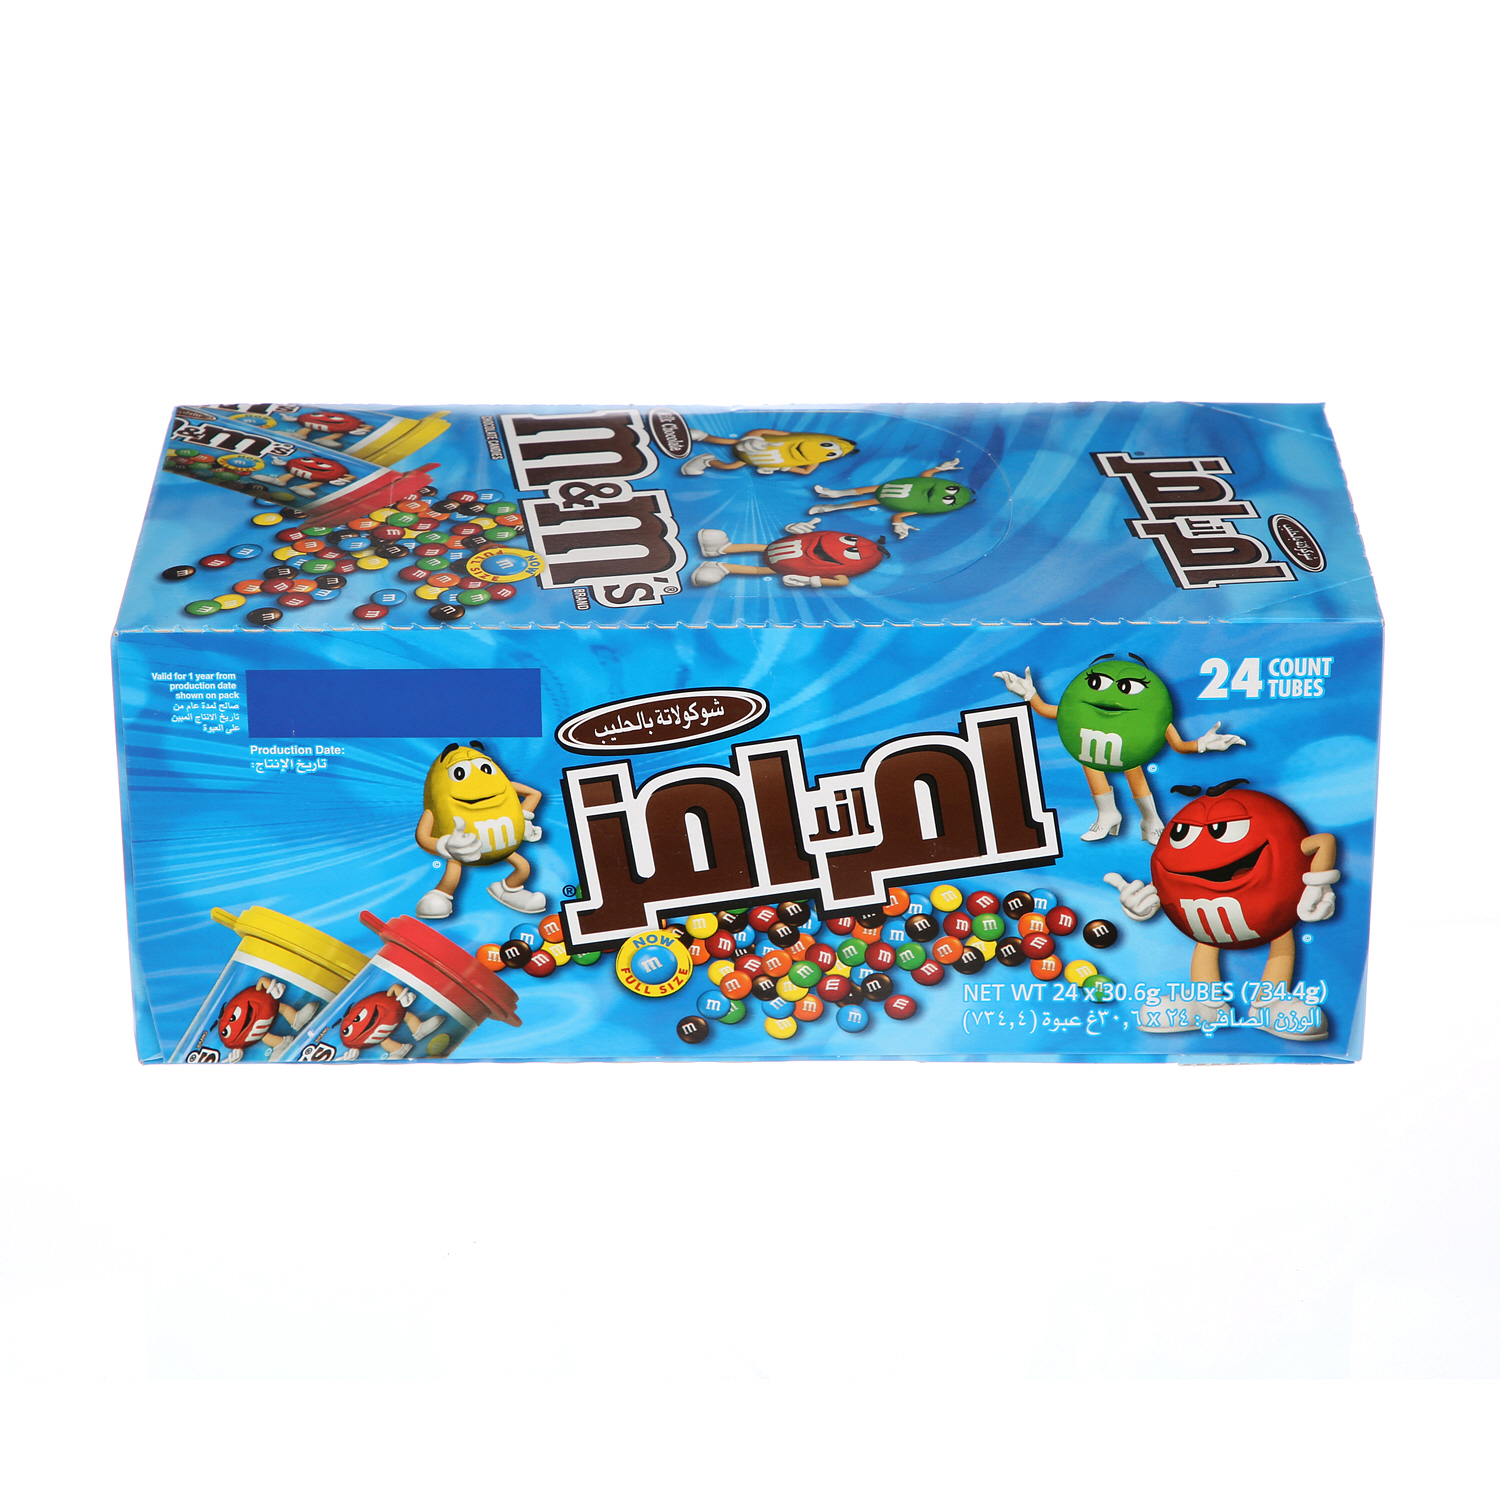 m&m's Chocolate Minis Tubes 30gm × 24'S